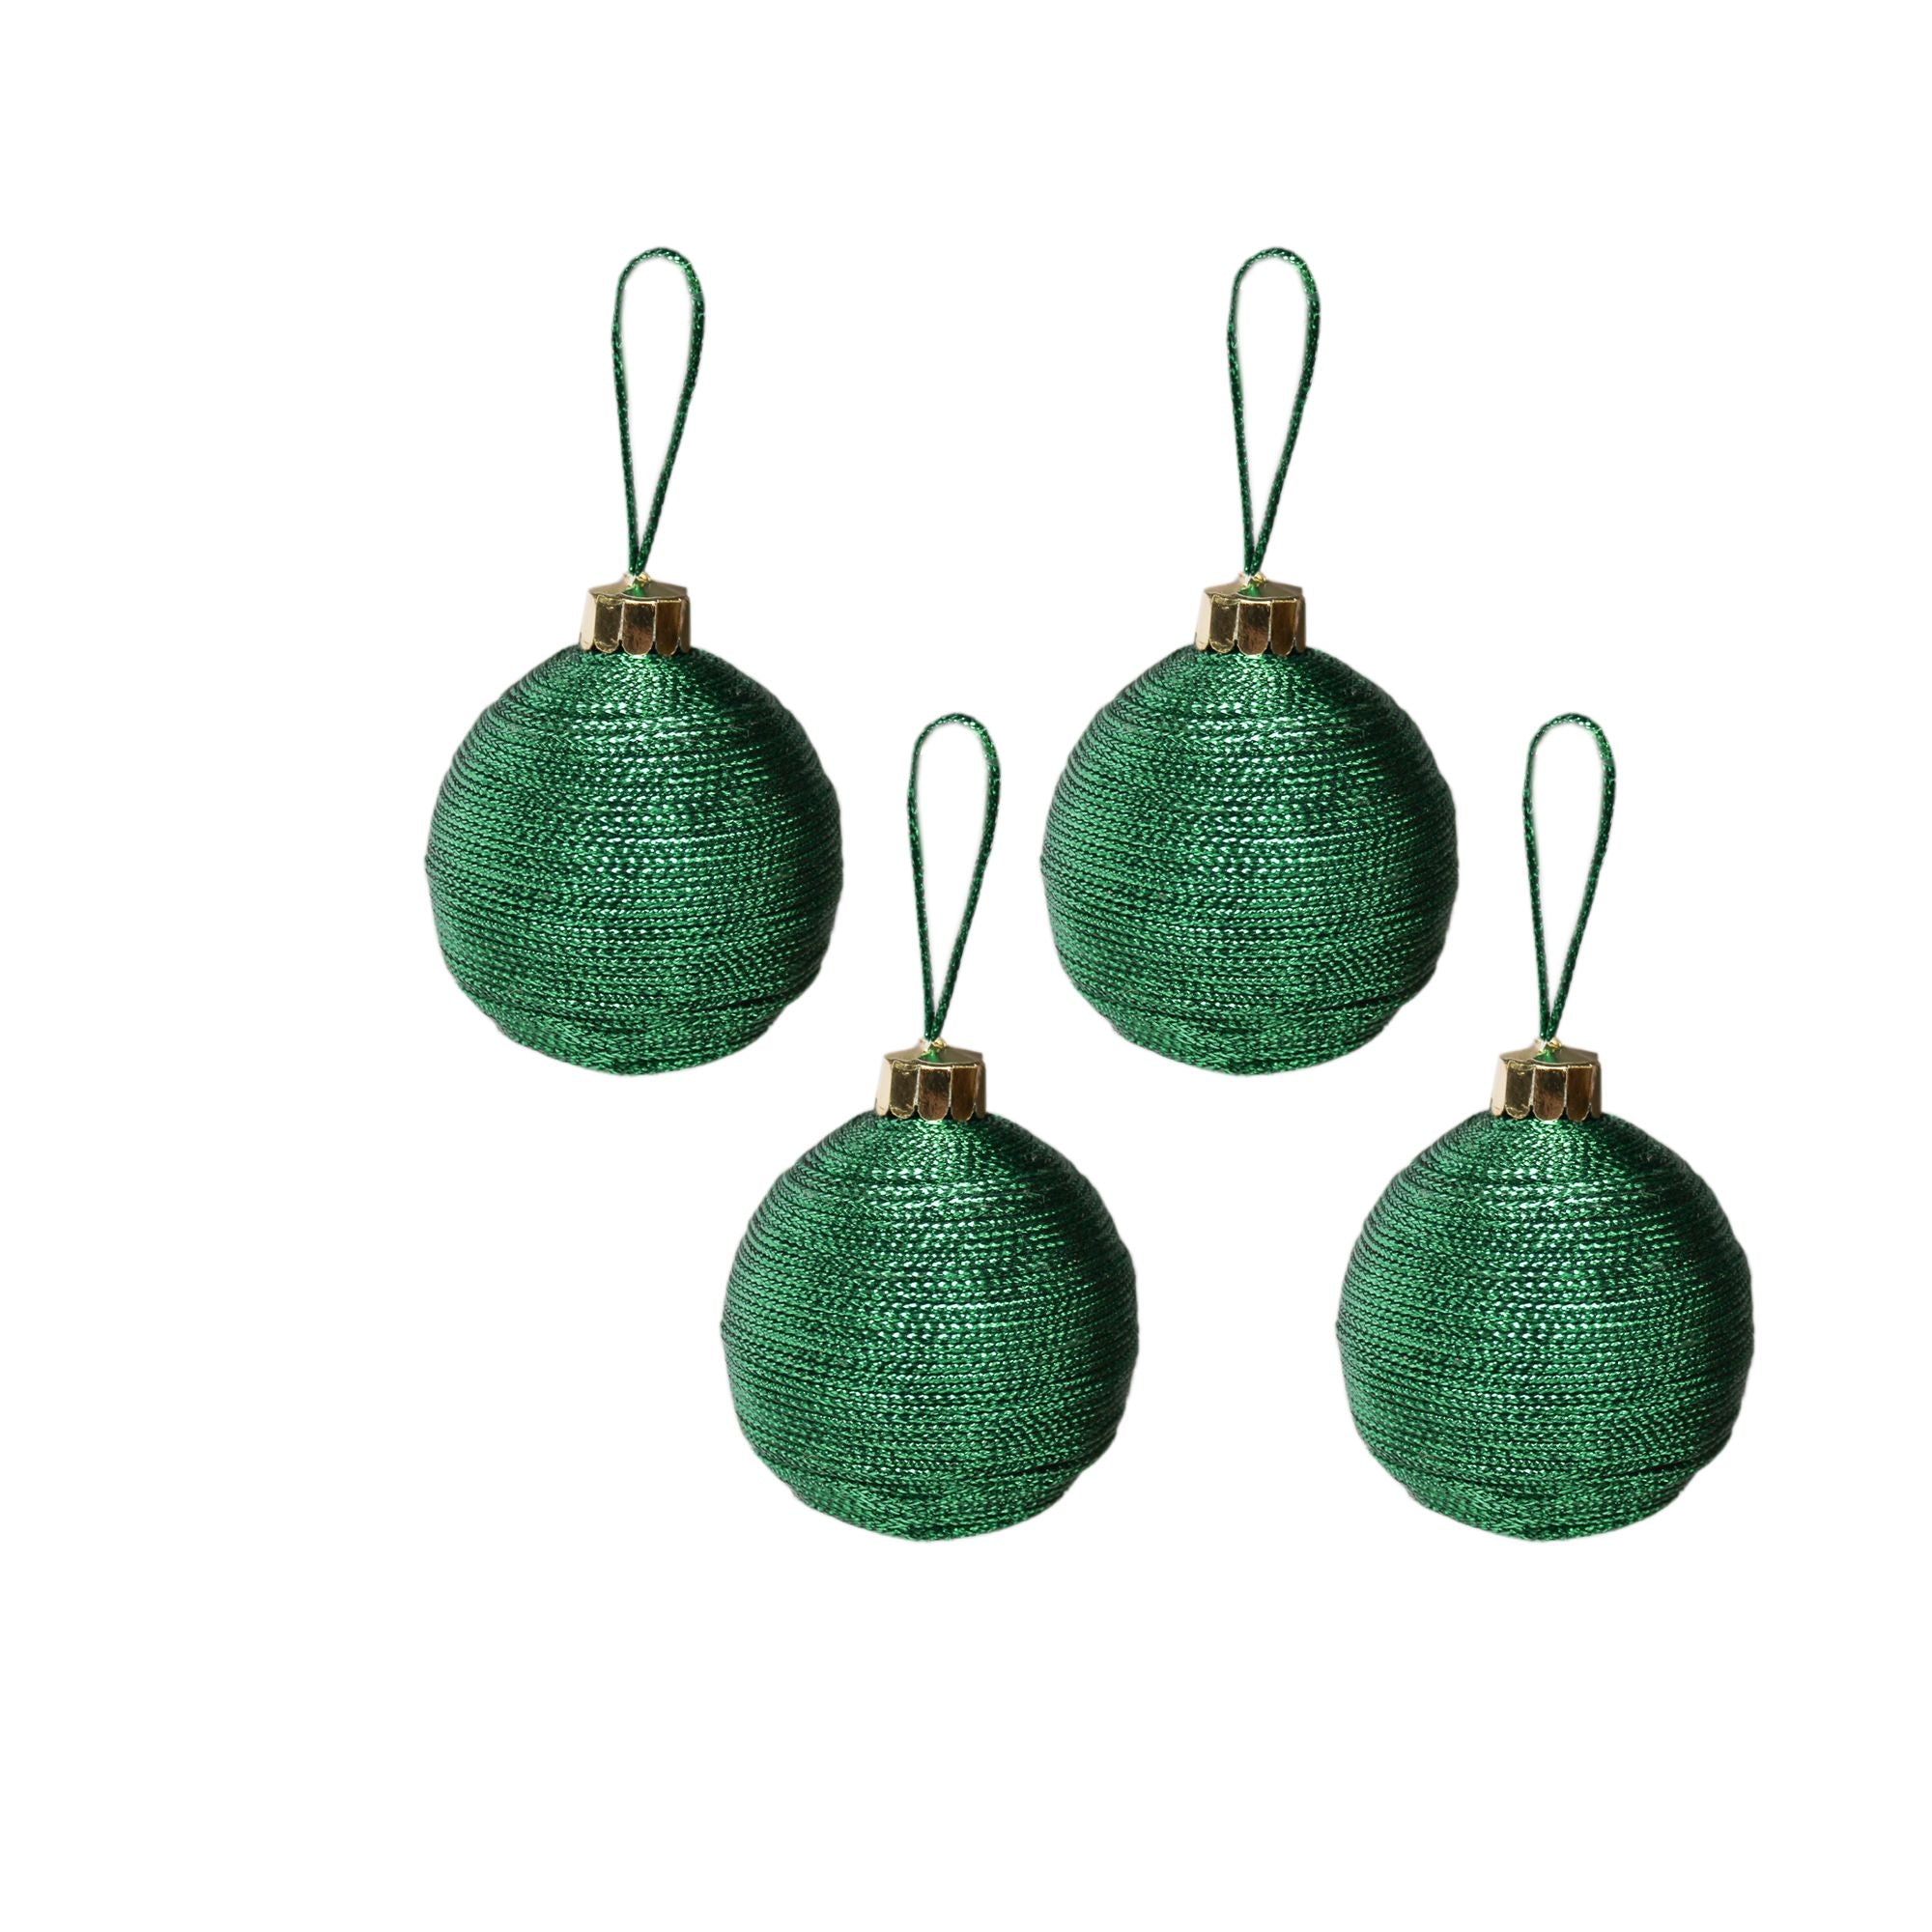 Handmade Christmas Ornaments - Lurex Baubles, 50mm, Green, 4pc